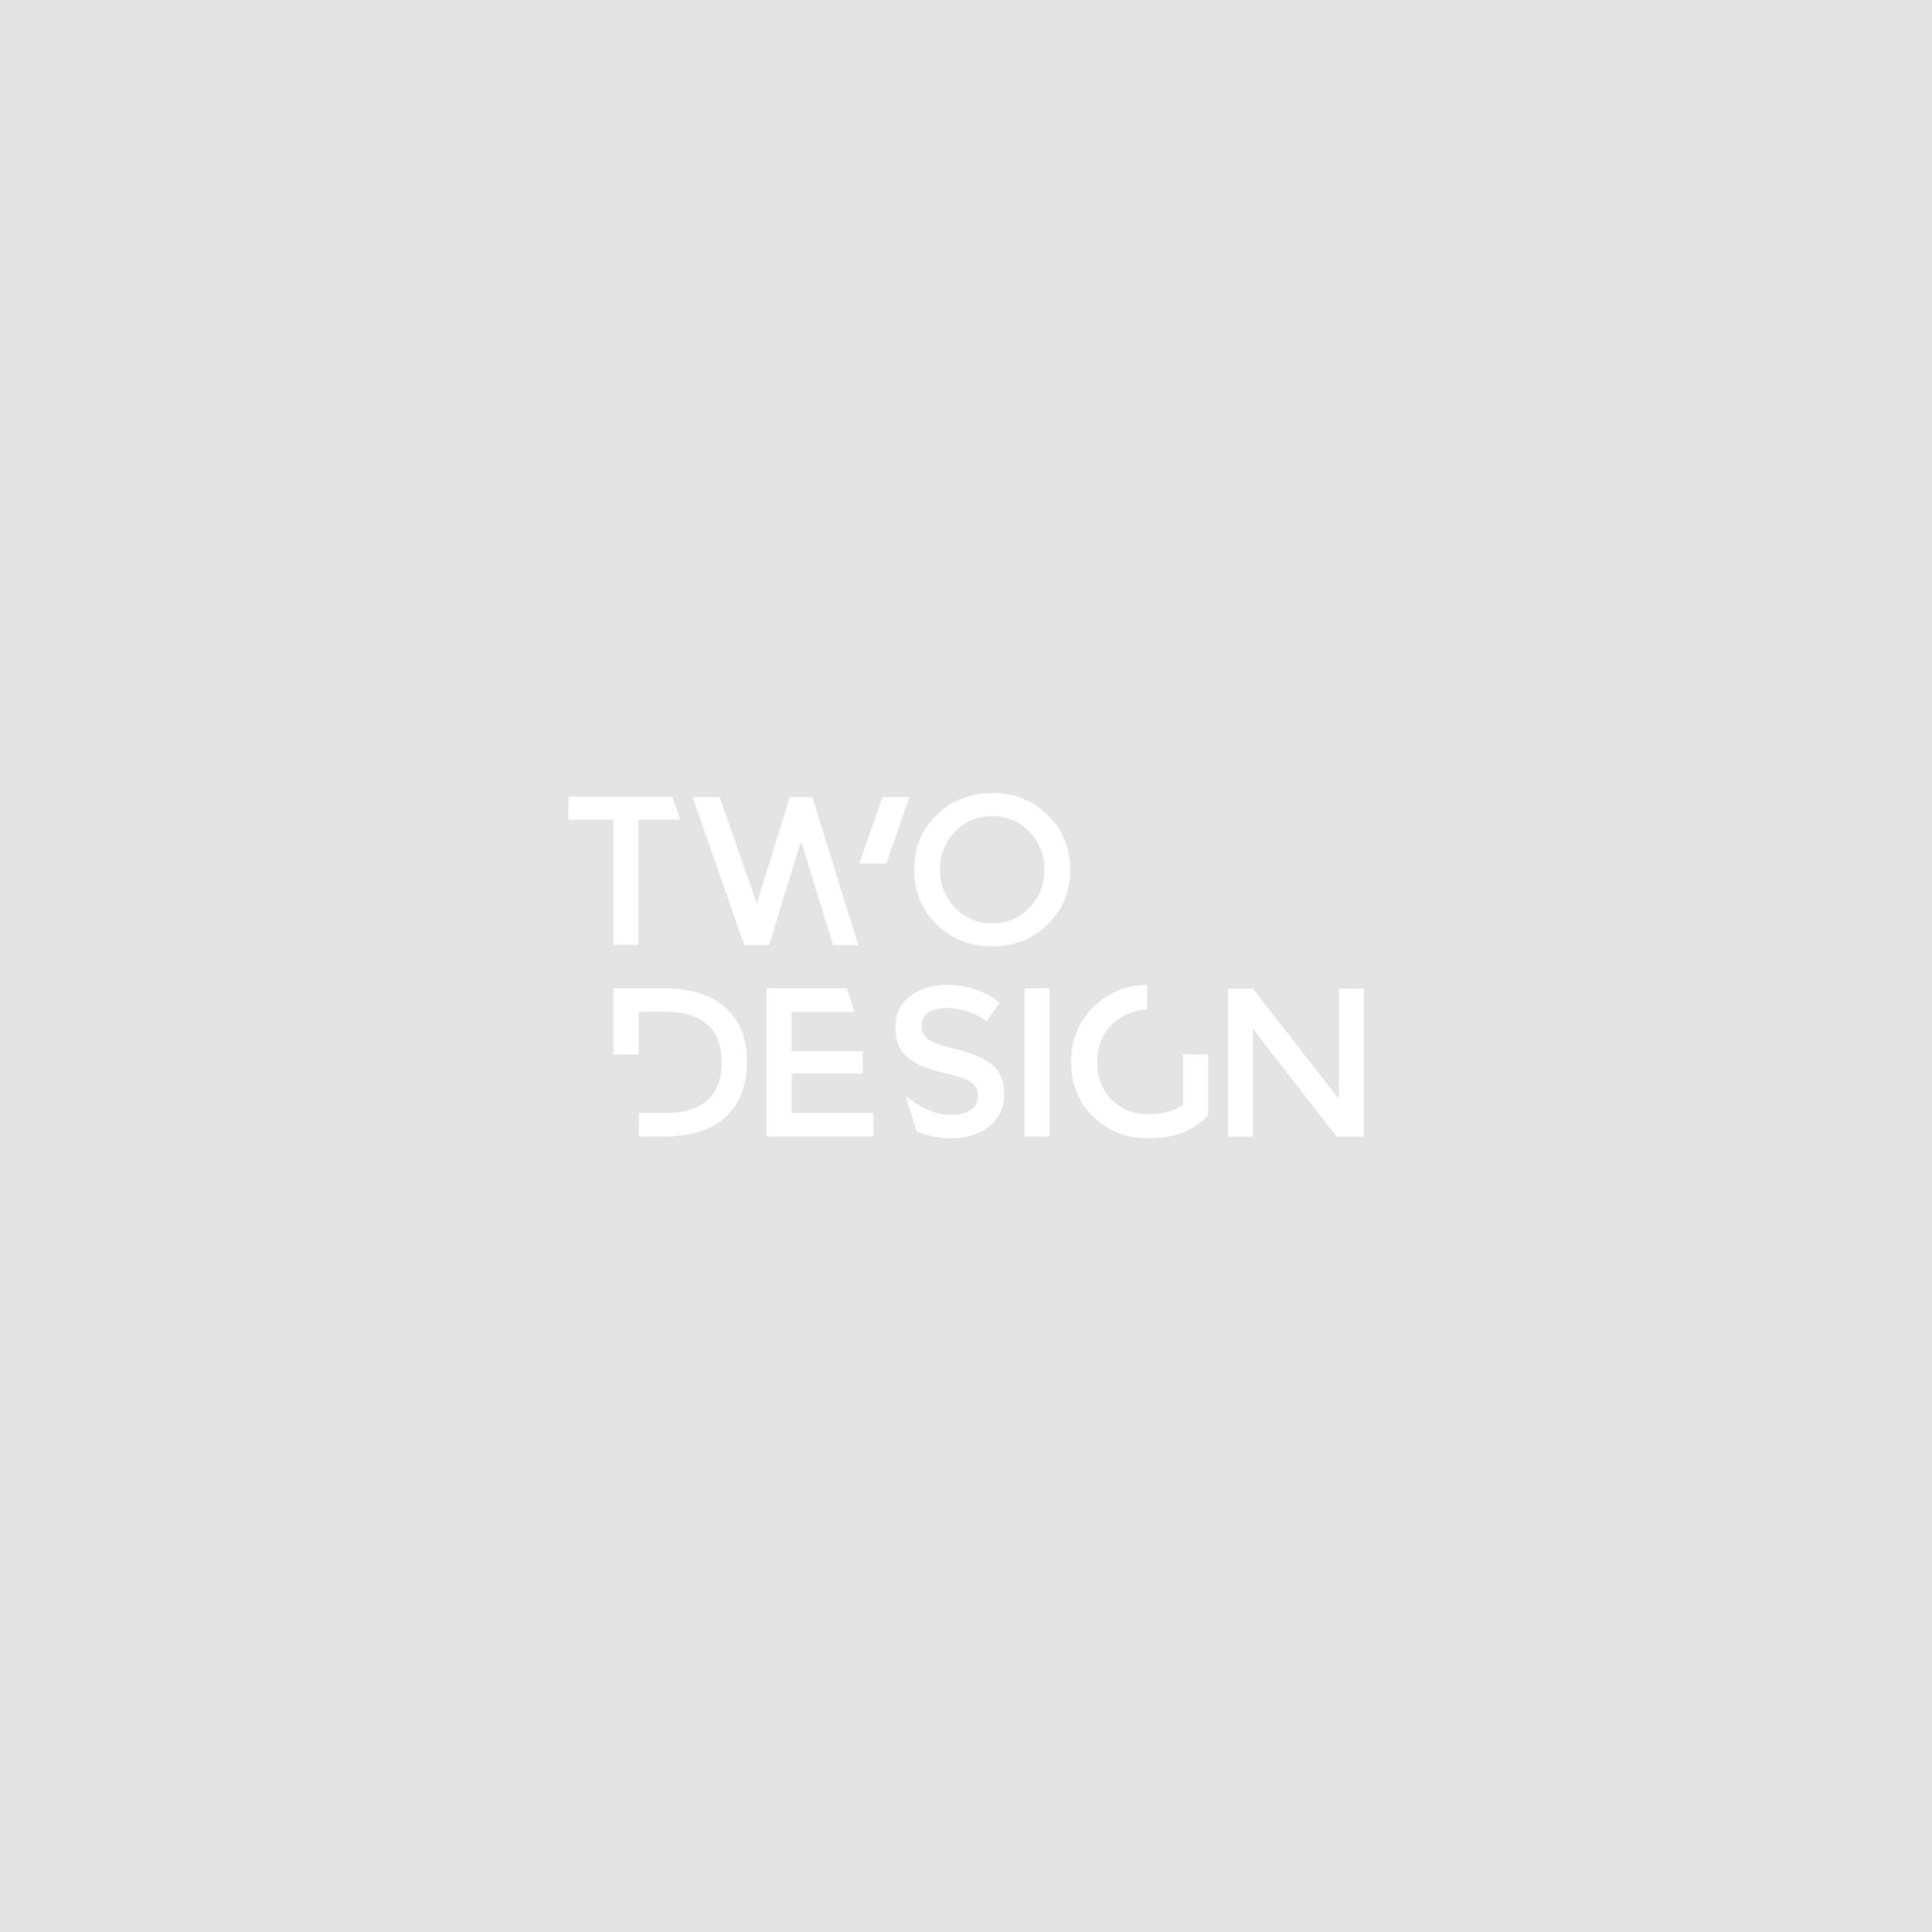 Two_design_placeholder 7.jpg